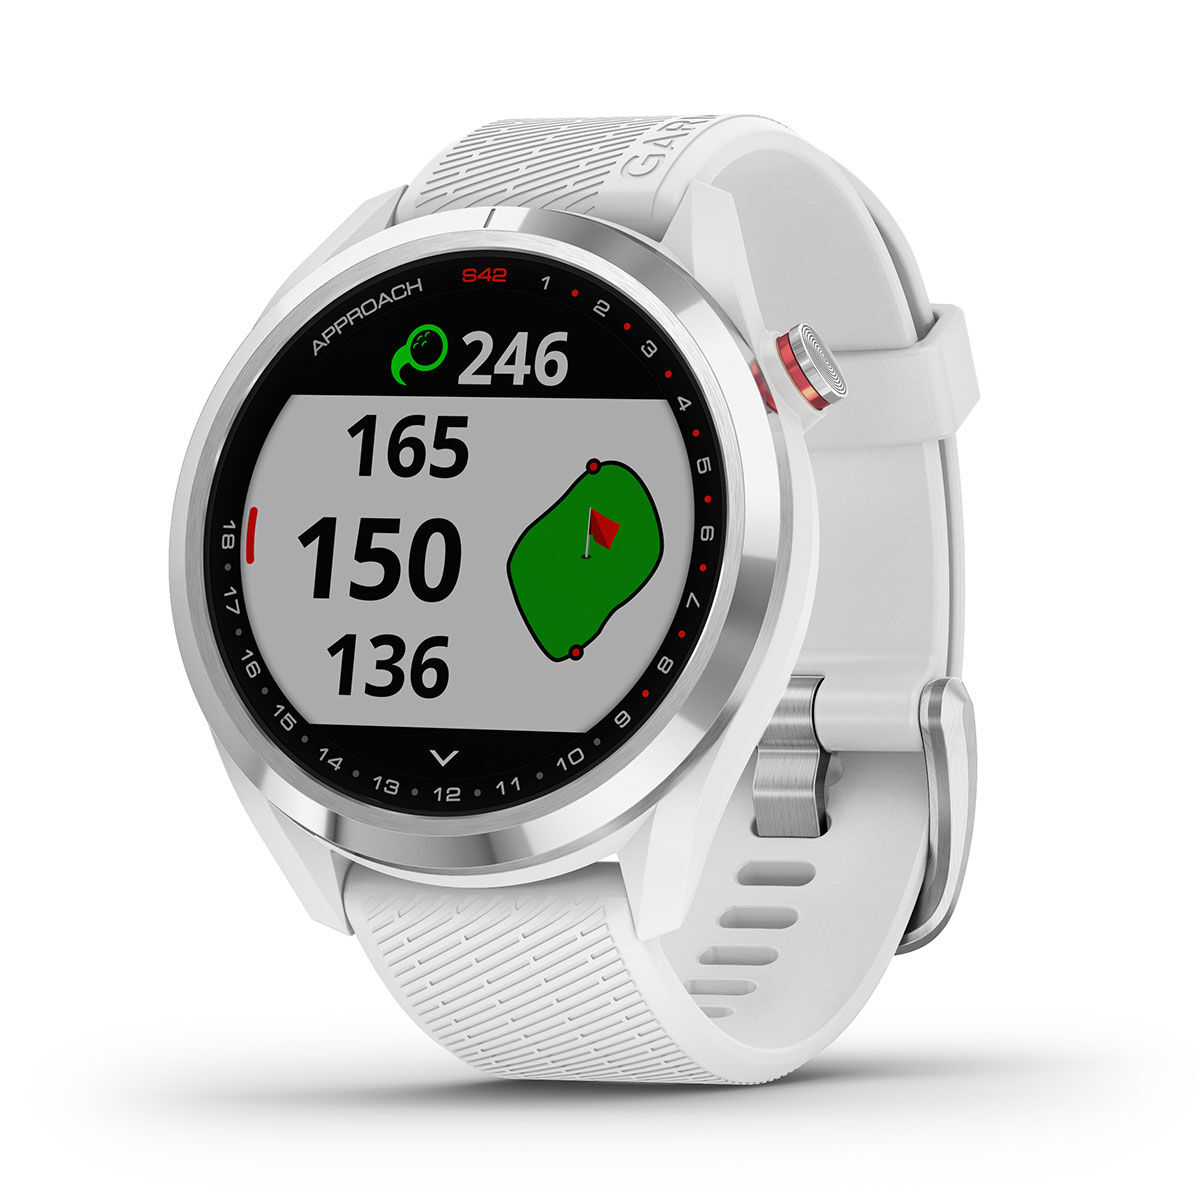 Garmin Golf GPS Watch, Silver and White Stylish Approach S42 | American Golf, One Size - Father's Day Gift von Garmin